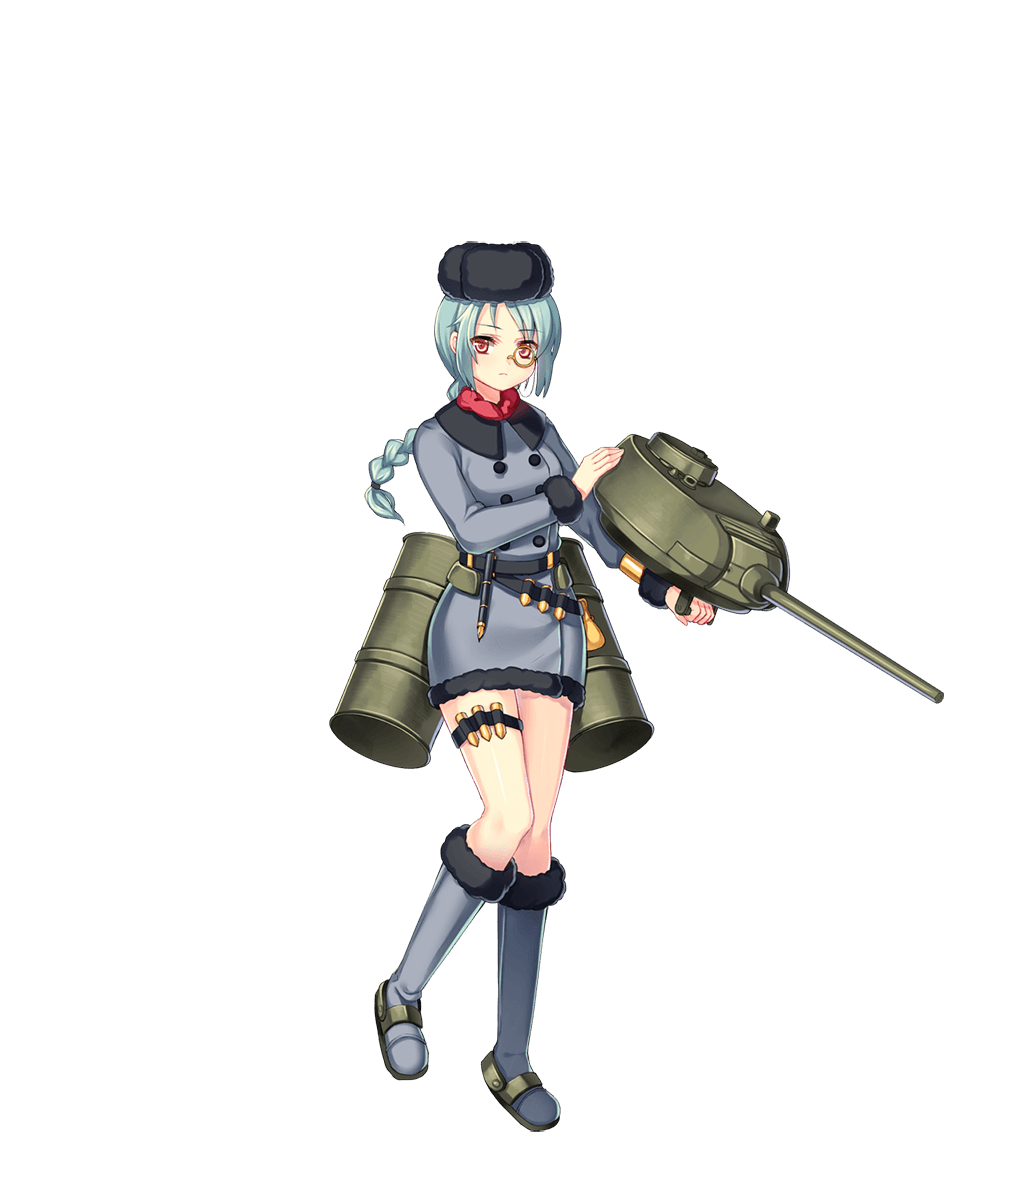 裝甲少女 T34-85 普通.png